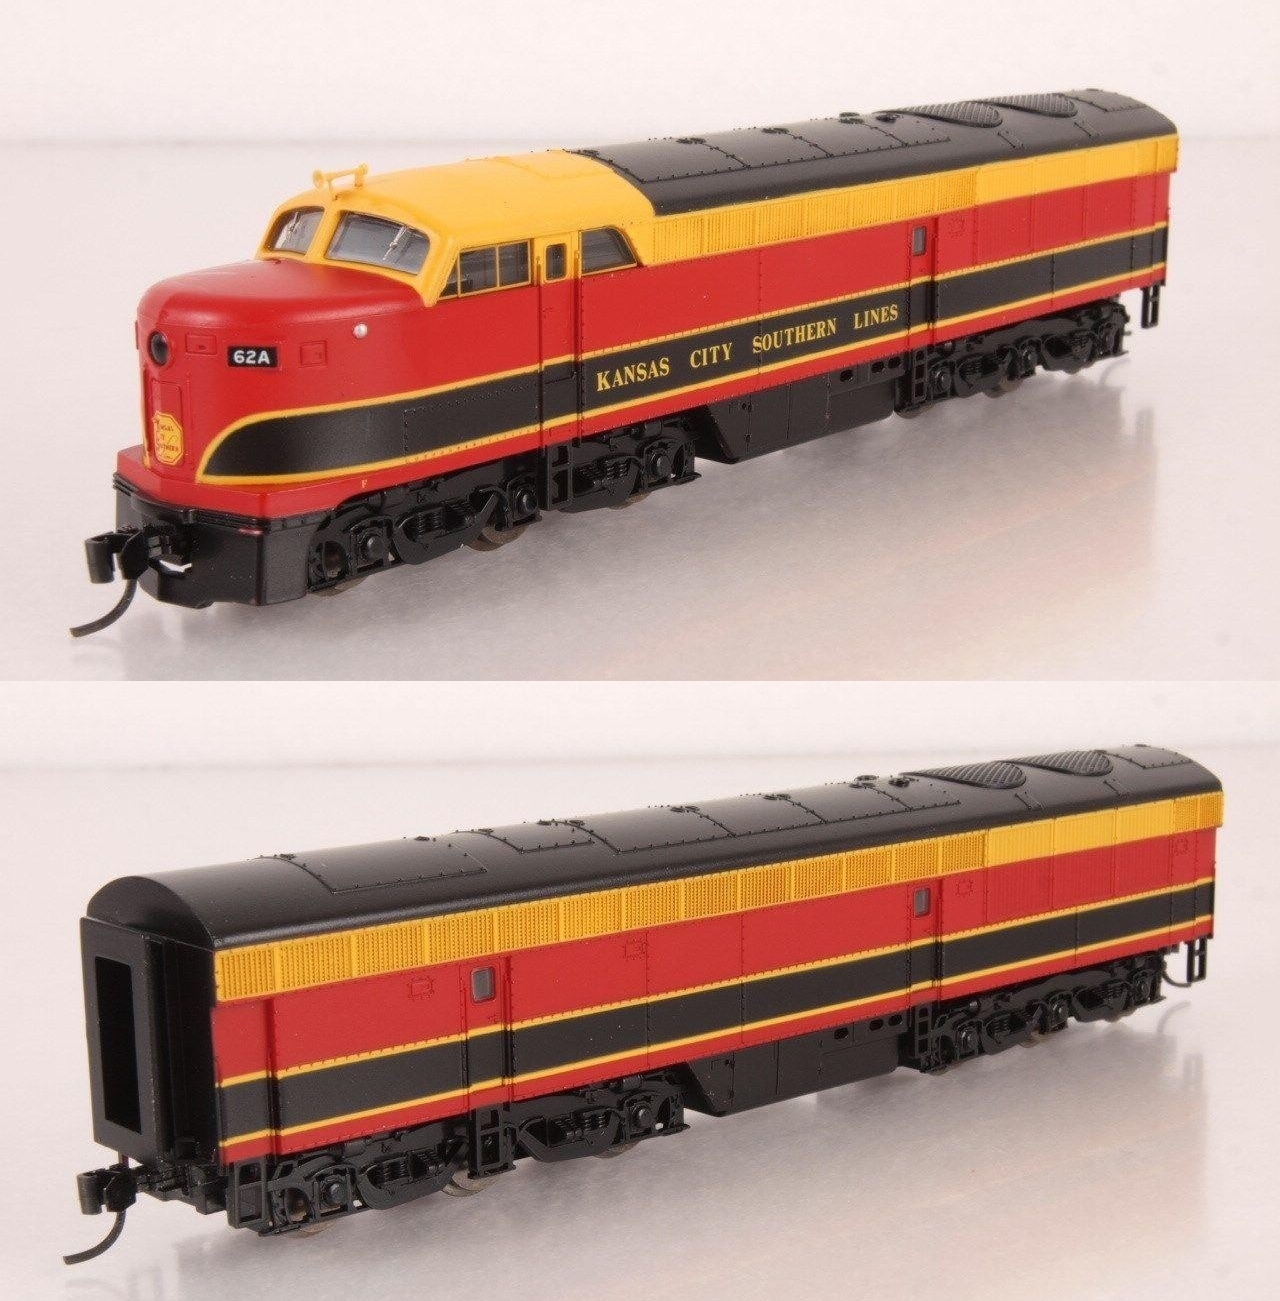 N Scale - Life-Like - 7497 - Locomotive, Diesel, Fairbanks Morse, Erie-Built - Kansas City Southern - 62A, 62B